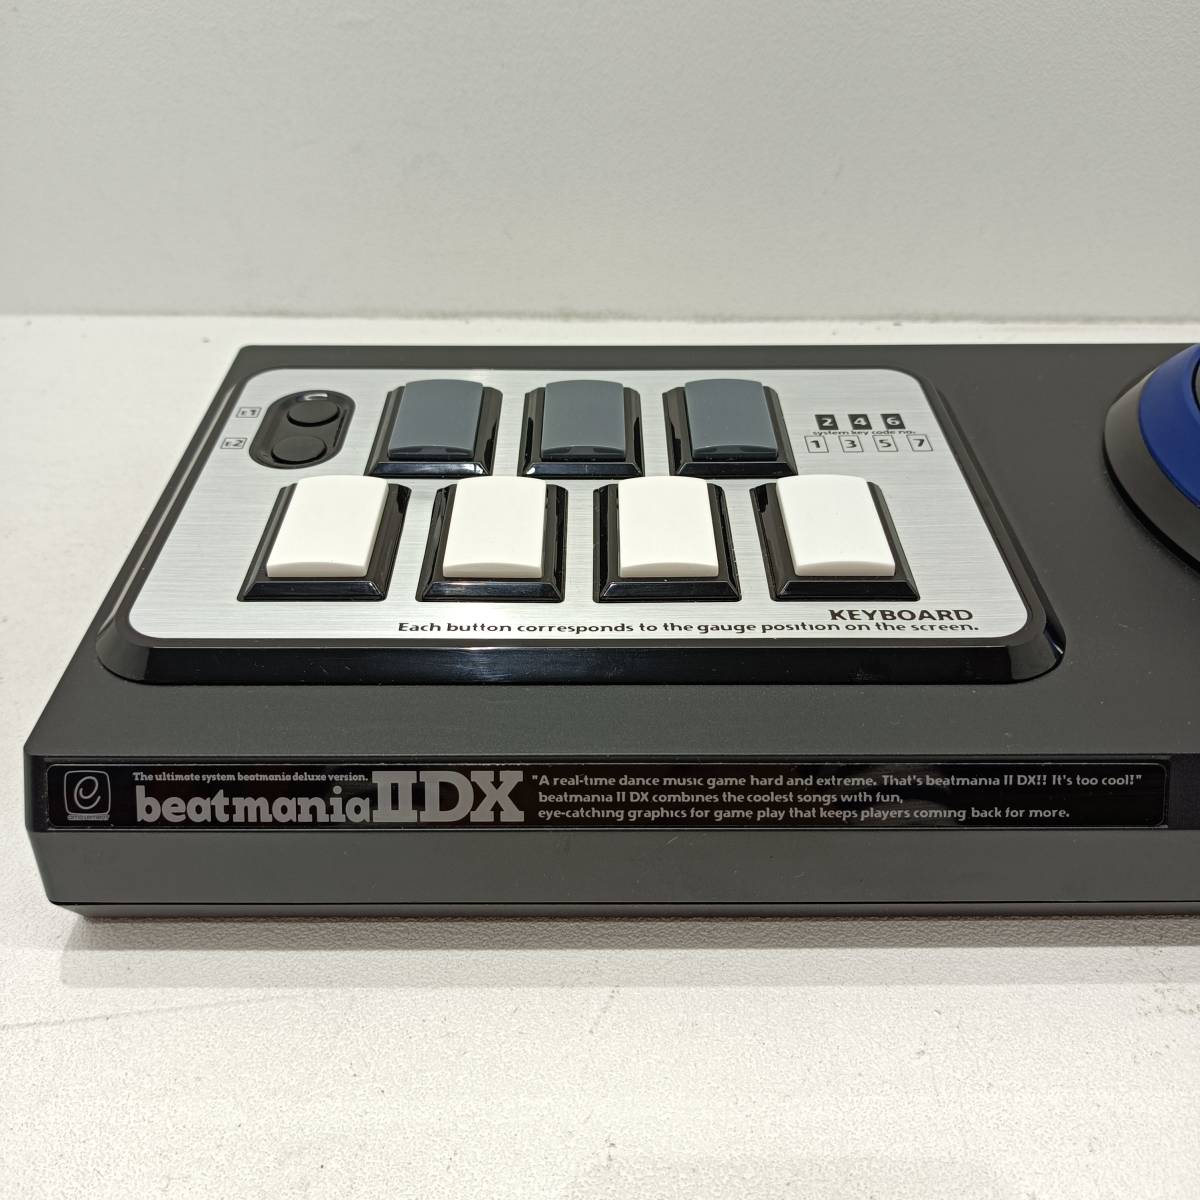 065 A) beatmania IIDX 専用コントローラ エントリーモデル ビート 